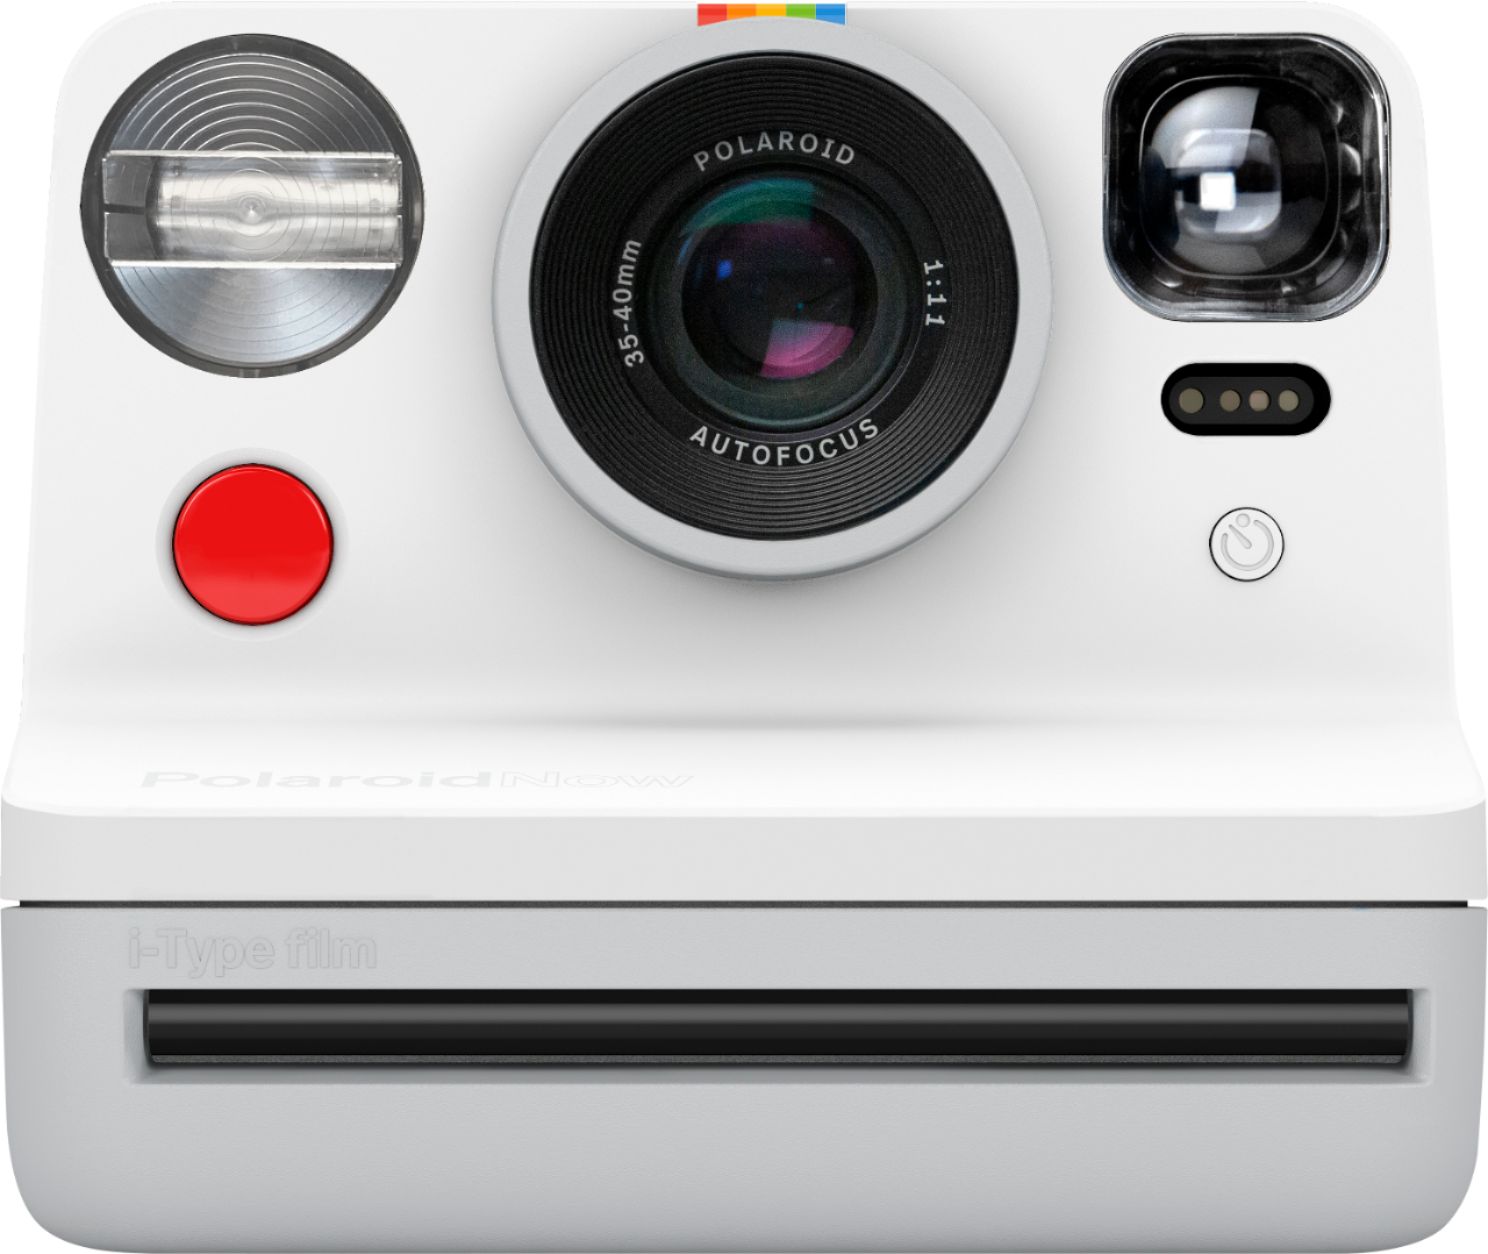 Polaroid Refurbished 600 Square Camera Review 2021